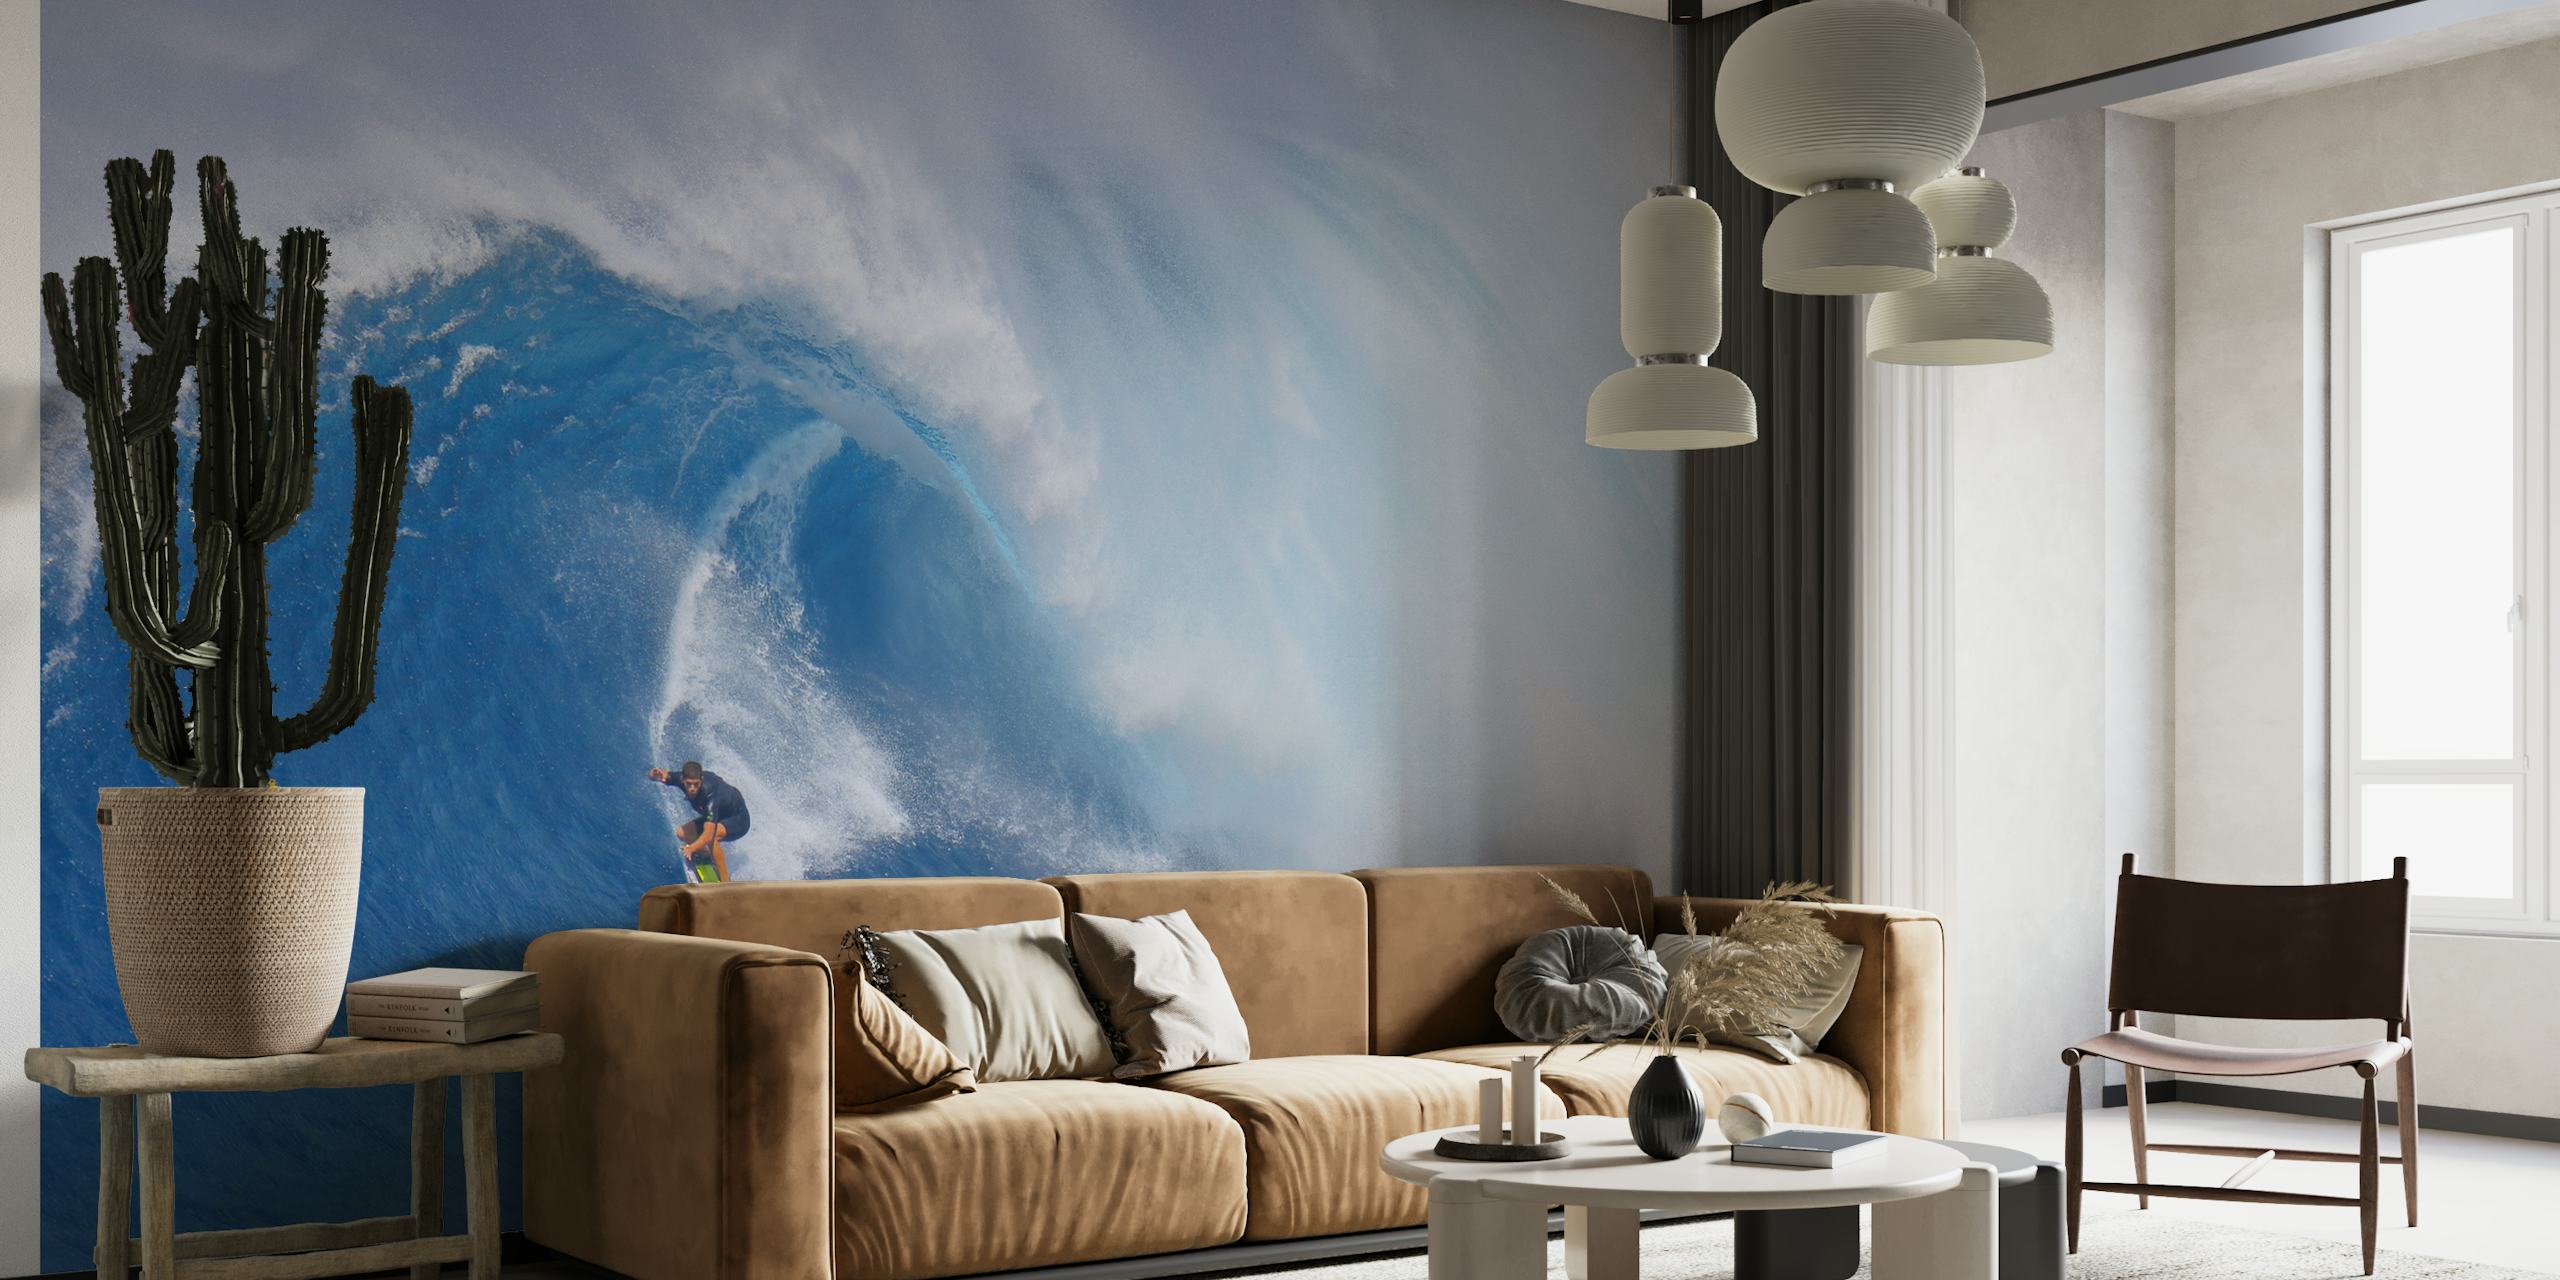 Surfer jaše na golemom valu na zidnoj slici "Surfing Jaws".